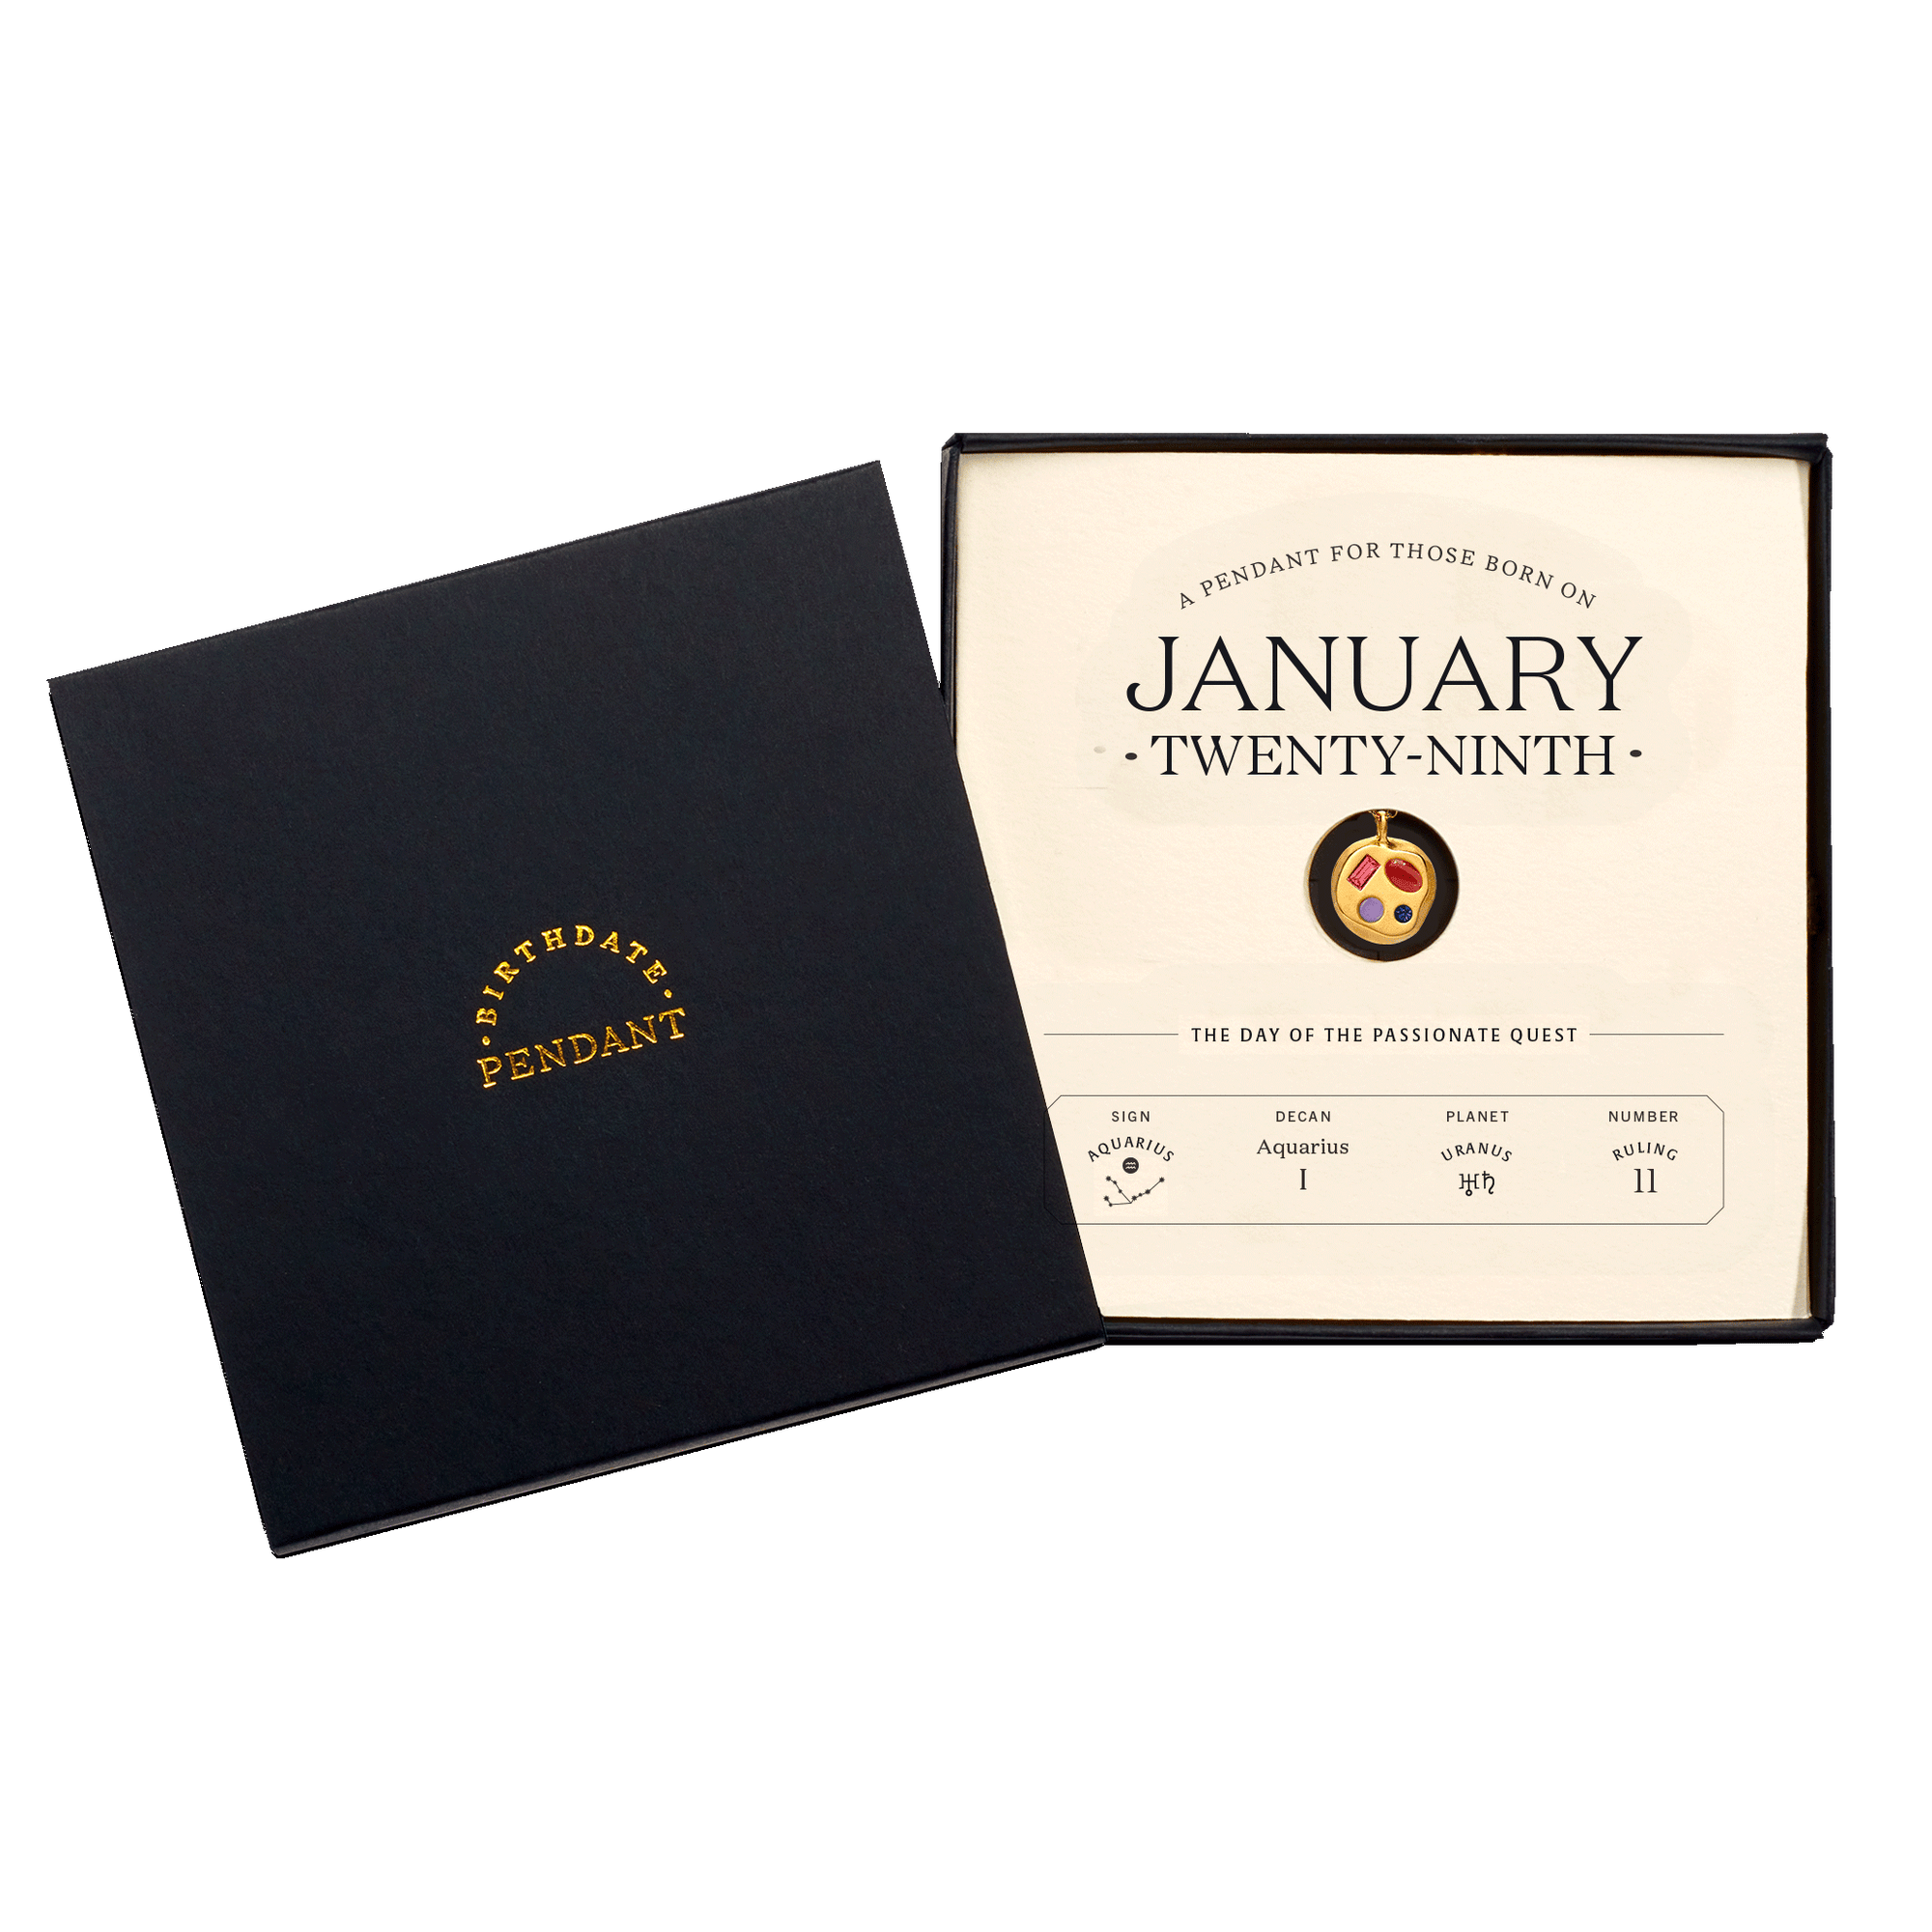 The January Twenty-Ninth Pendant inside its box